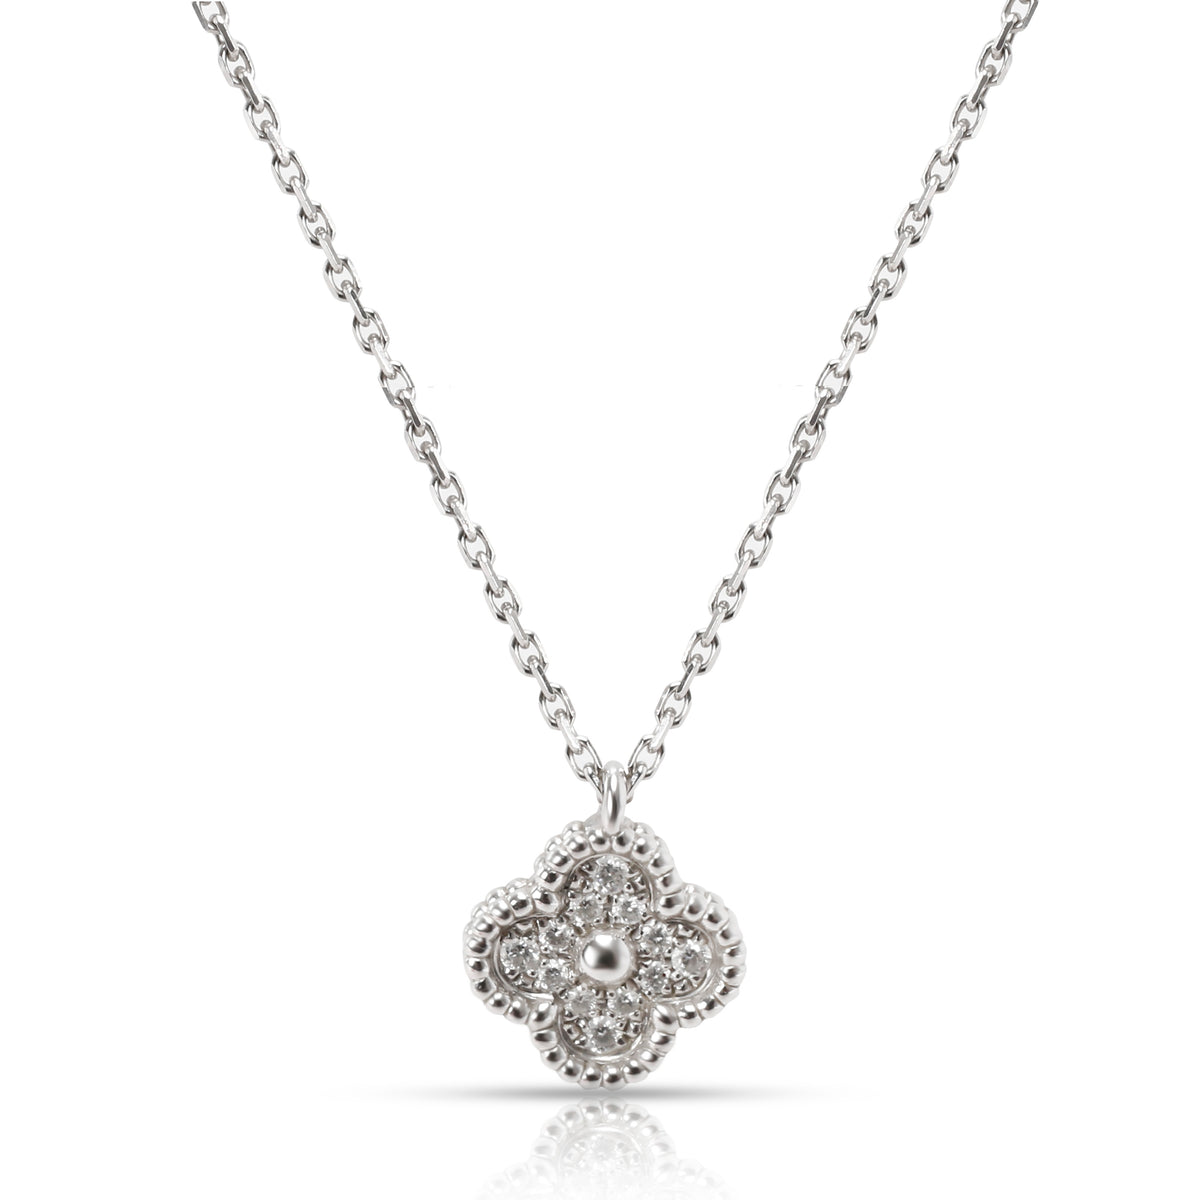 Van Cleef & Arpels Sweet Alhambra Diamond Pendant in 18K White Gold 0.12 CTW